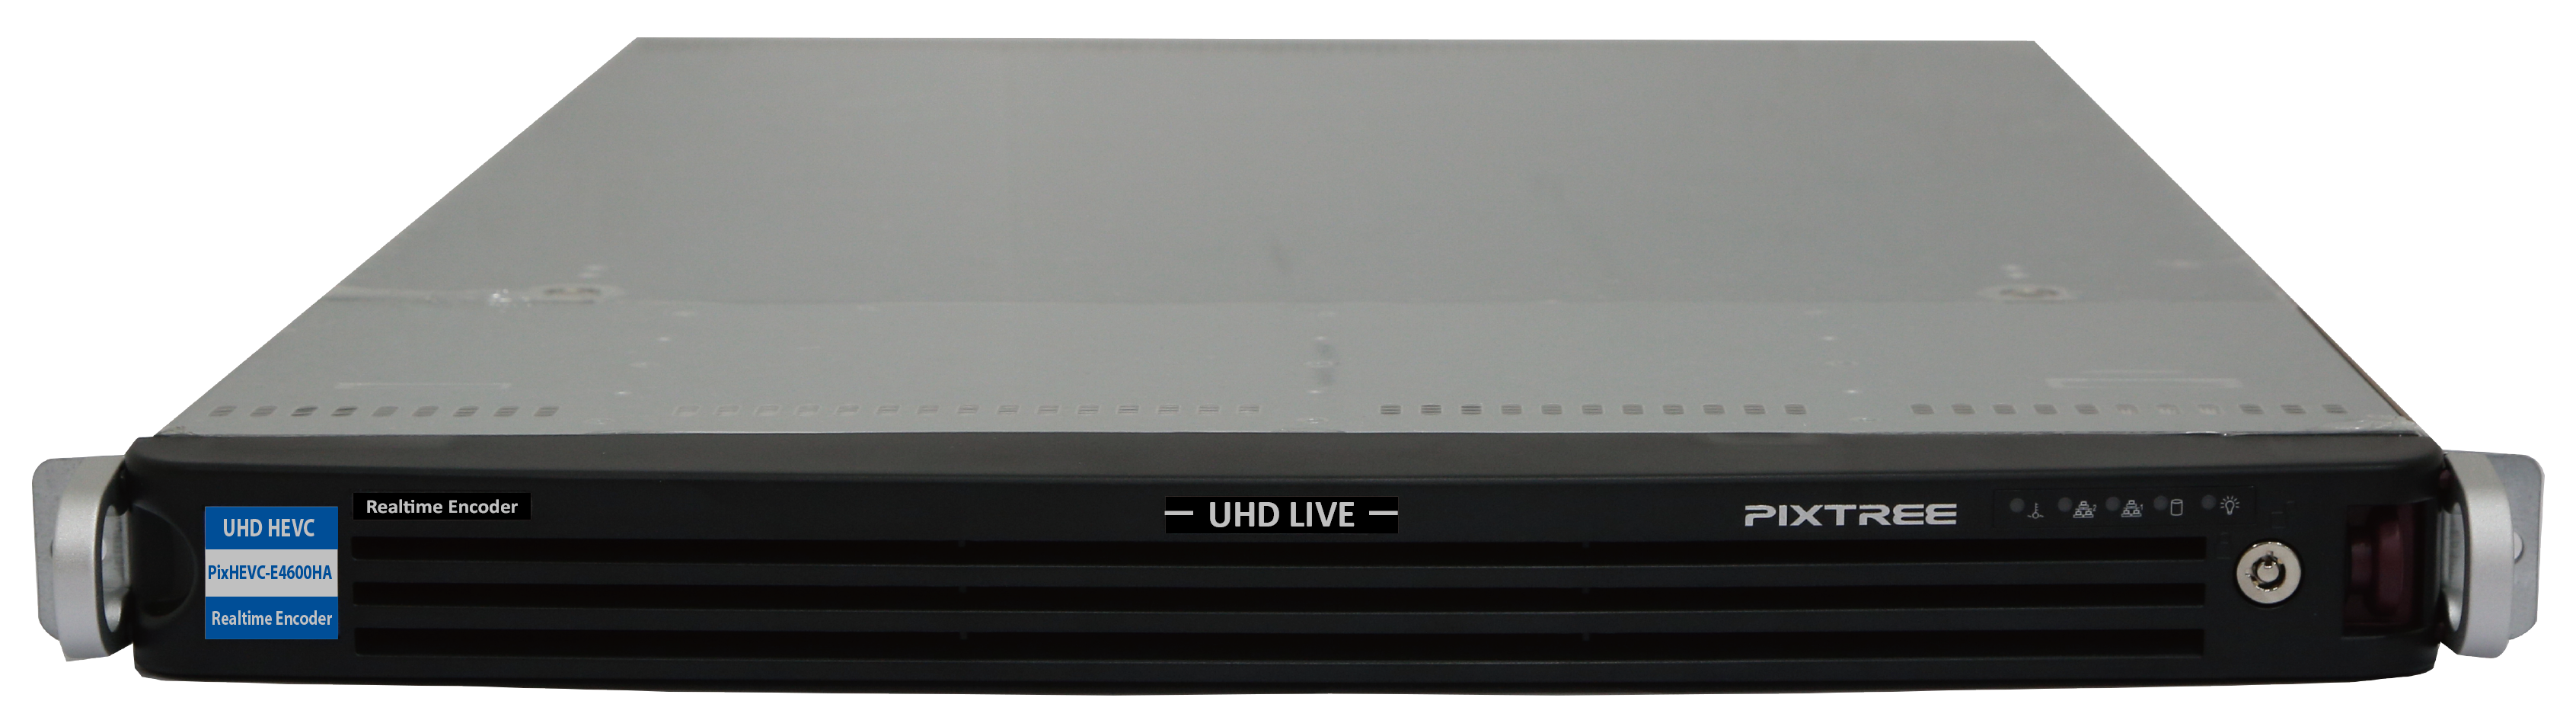 MPEG-H 오디오를 지원하는 픽스트리의 UHD 방송 실시간 인코더